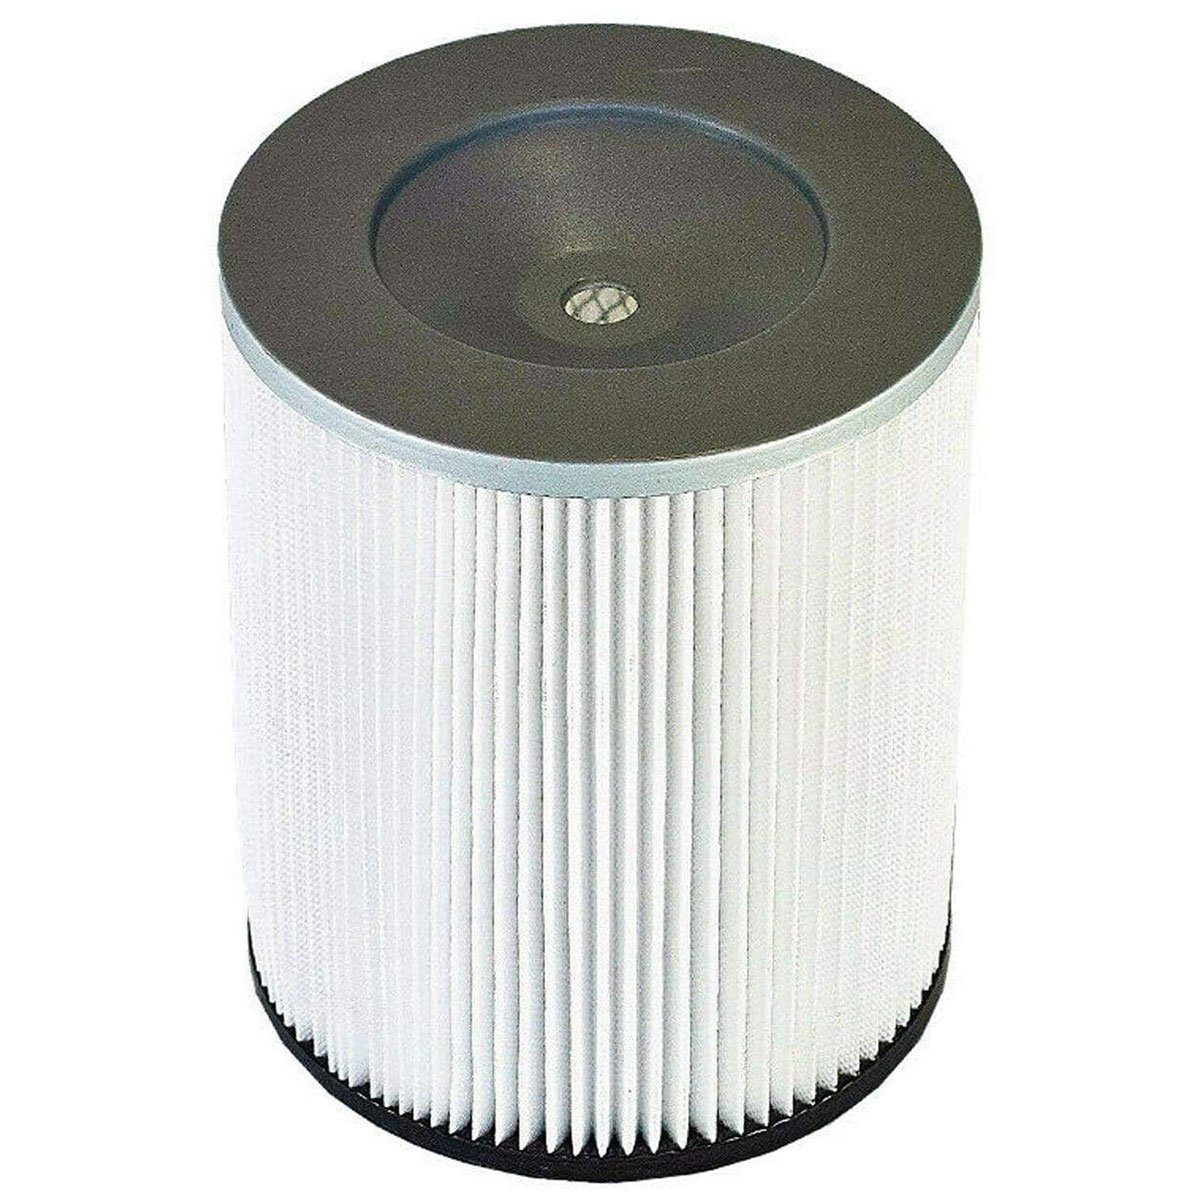 & BAUTEC Trockensauger» » Nass- Liter 100 Hepa-Filter Industriesauger Schwebstoff-Filter für